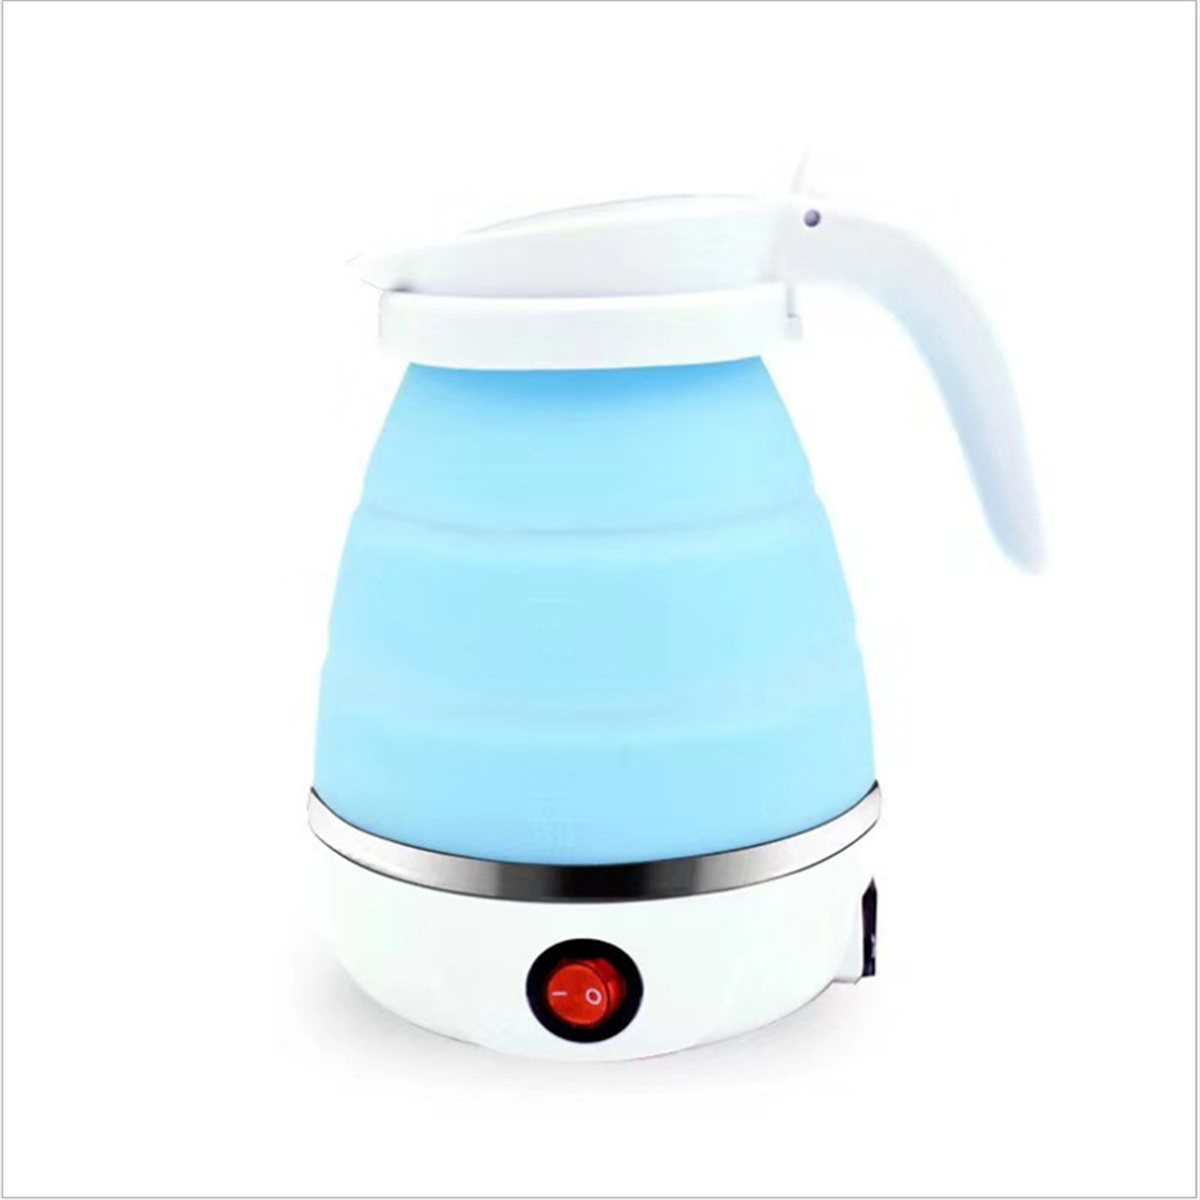 FEI Elektrischer Wasserkocher Blau Zusammenklappbarer Edelstahl 304 Wasserkocher, Mini-Wasserkocher Wasserkocher Blau